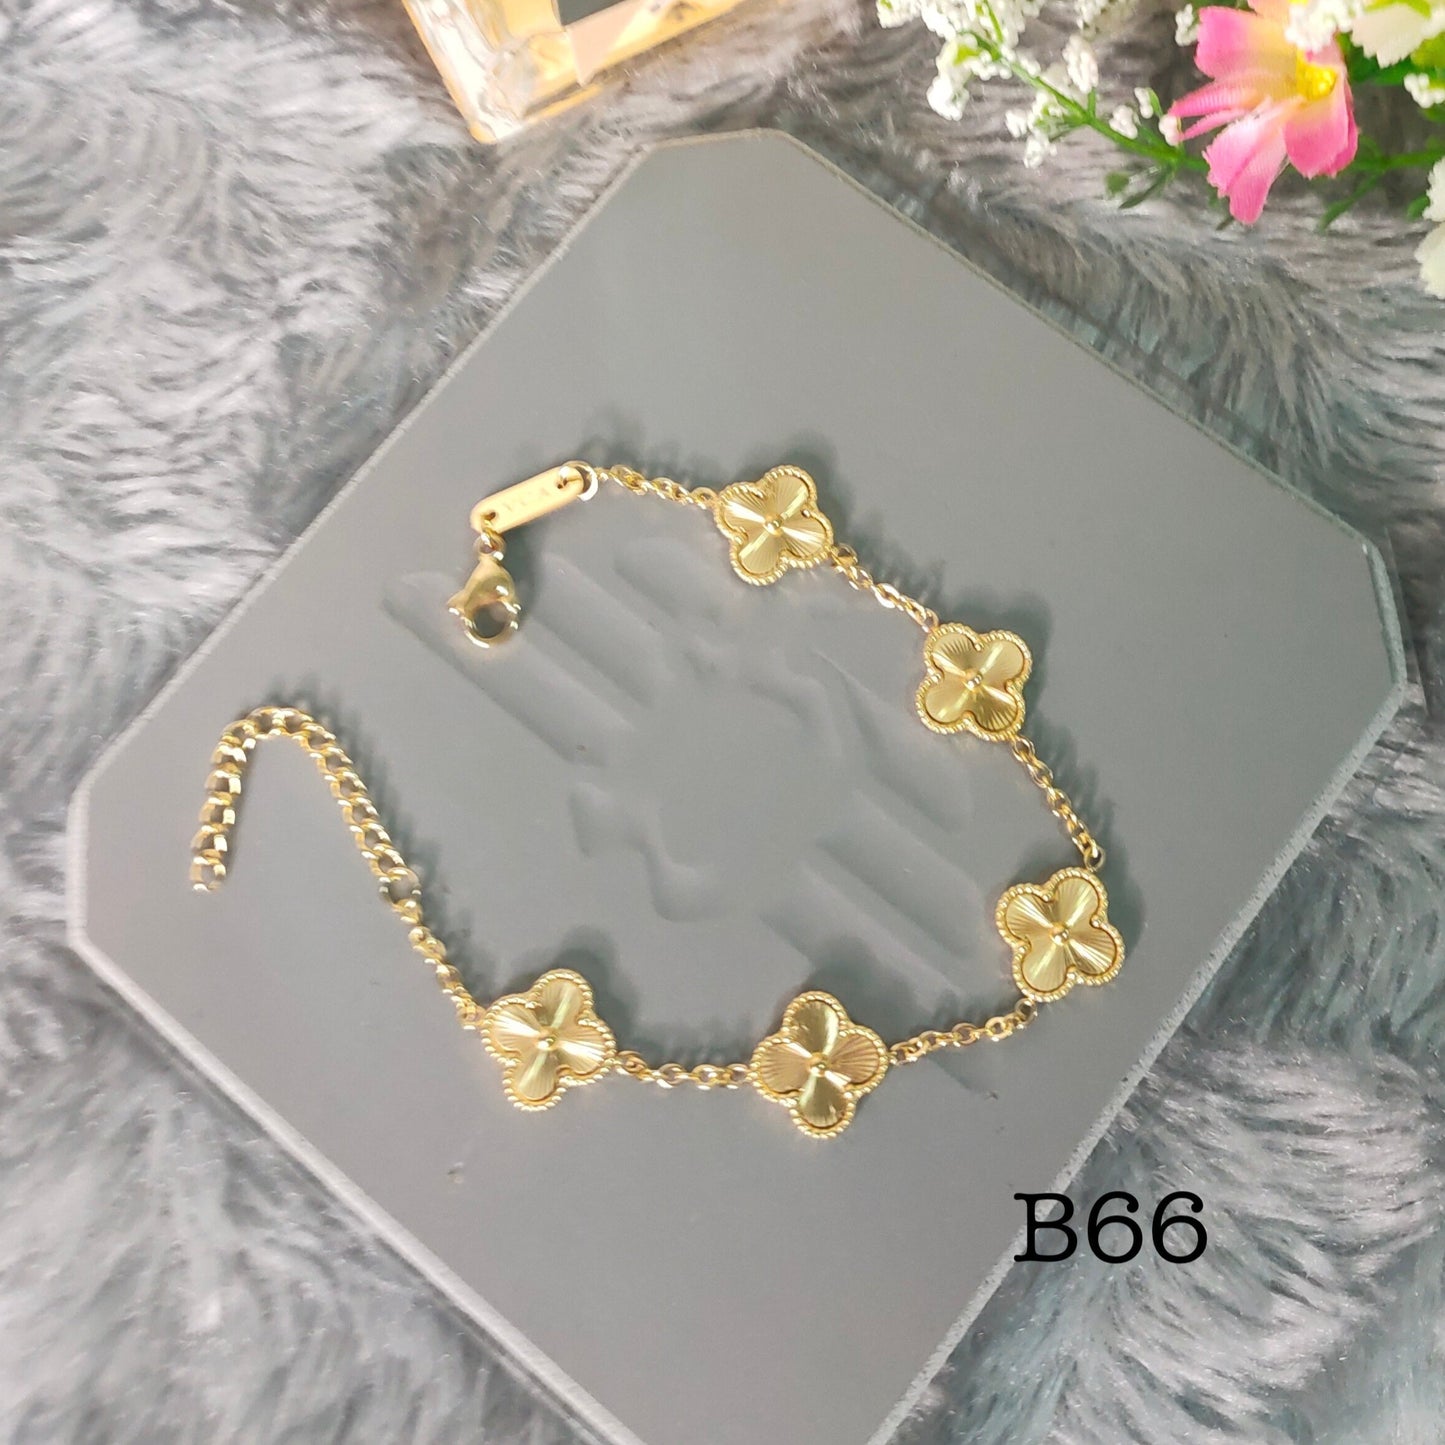 Four Leaf Clover Necklace, Bracelet and Earrings Set